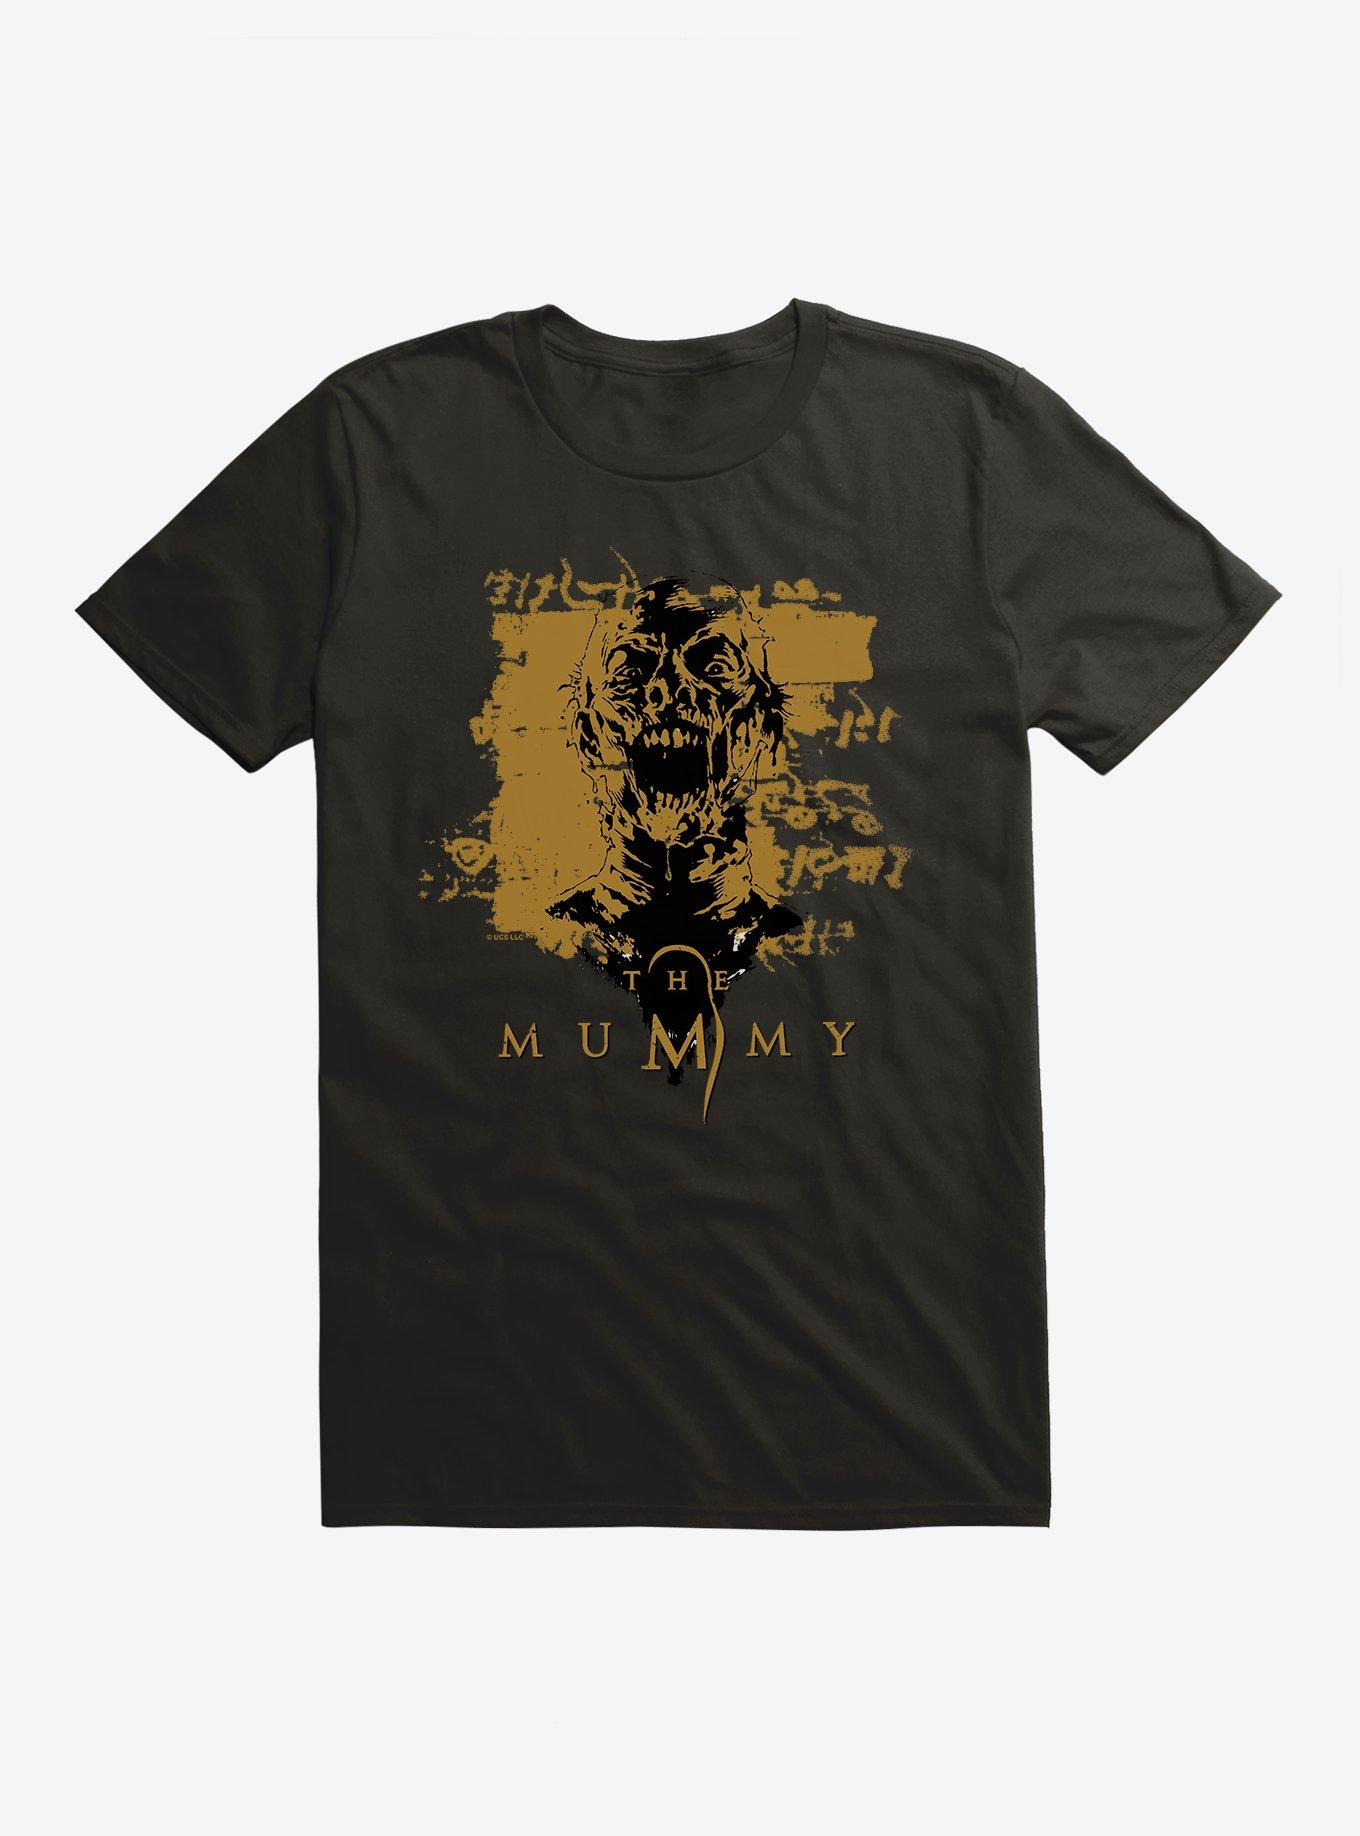 The Mummy Distressed Hieroglyphics T-Shirt